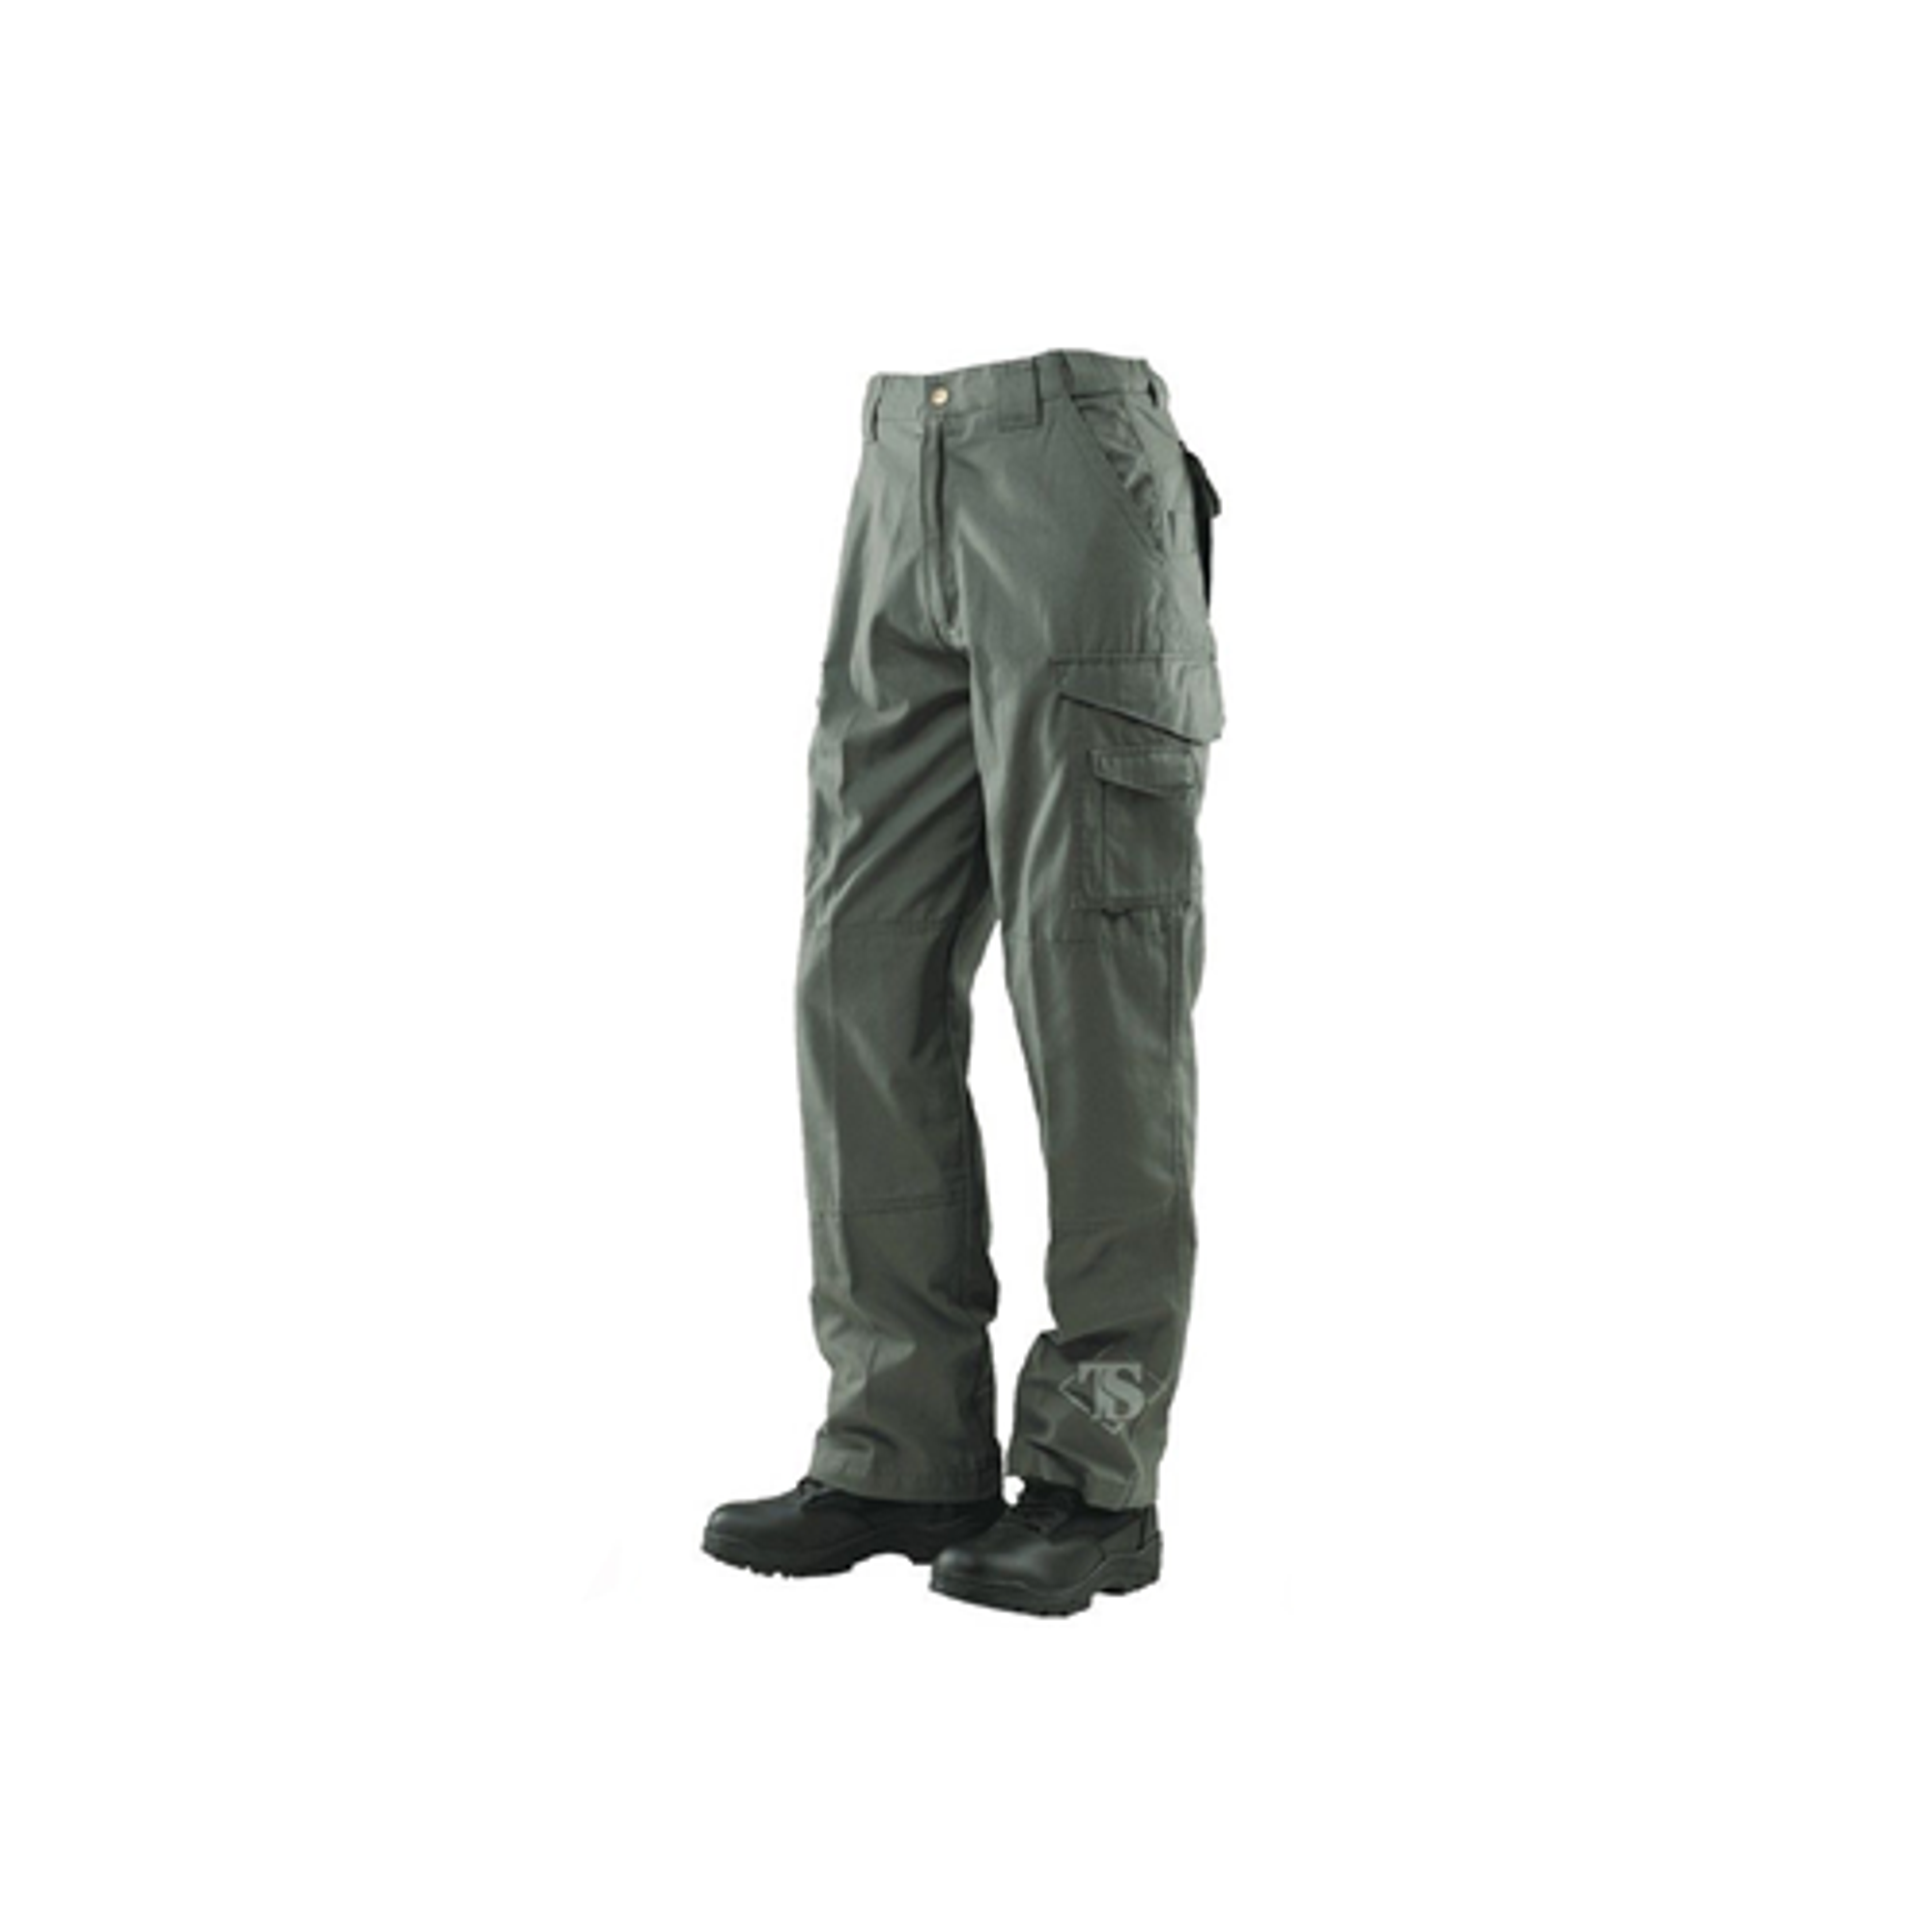 24-7 Original Tactical Pants - 6.5oz - Od Green - KRTSP-1064002